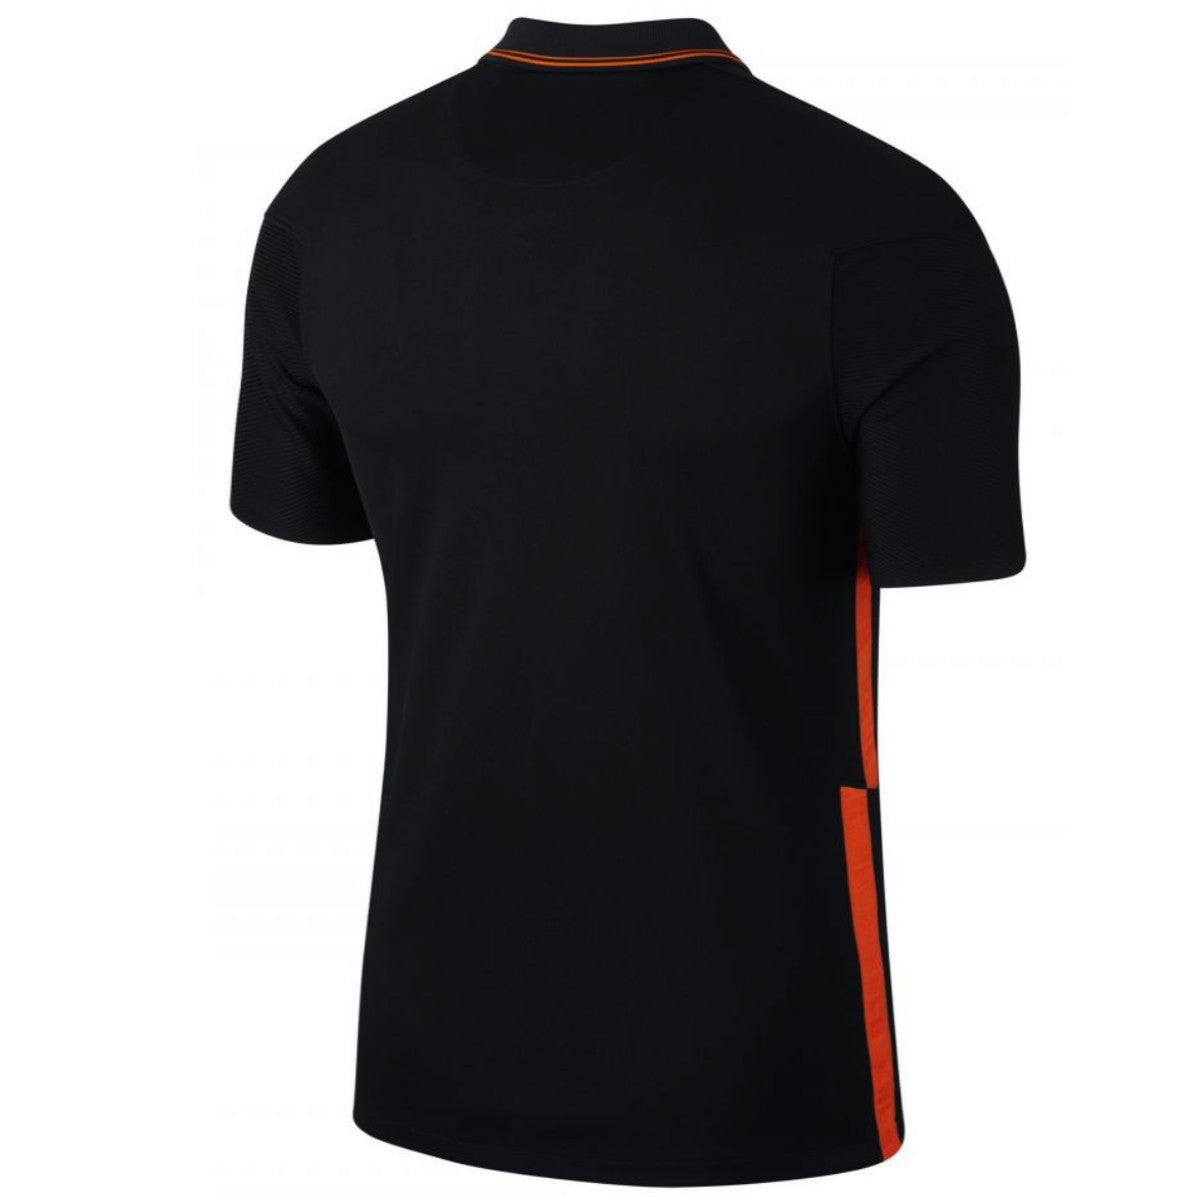 Netherlands national team Away soccer jersey 2021/22 - Nike SoccerTracksuits.com